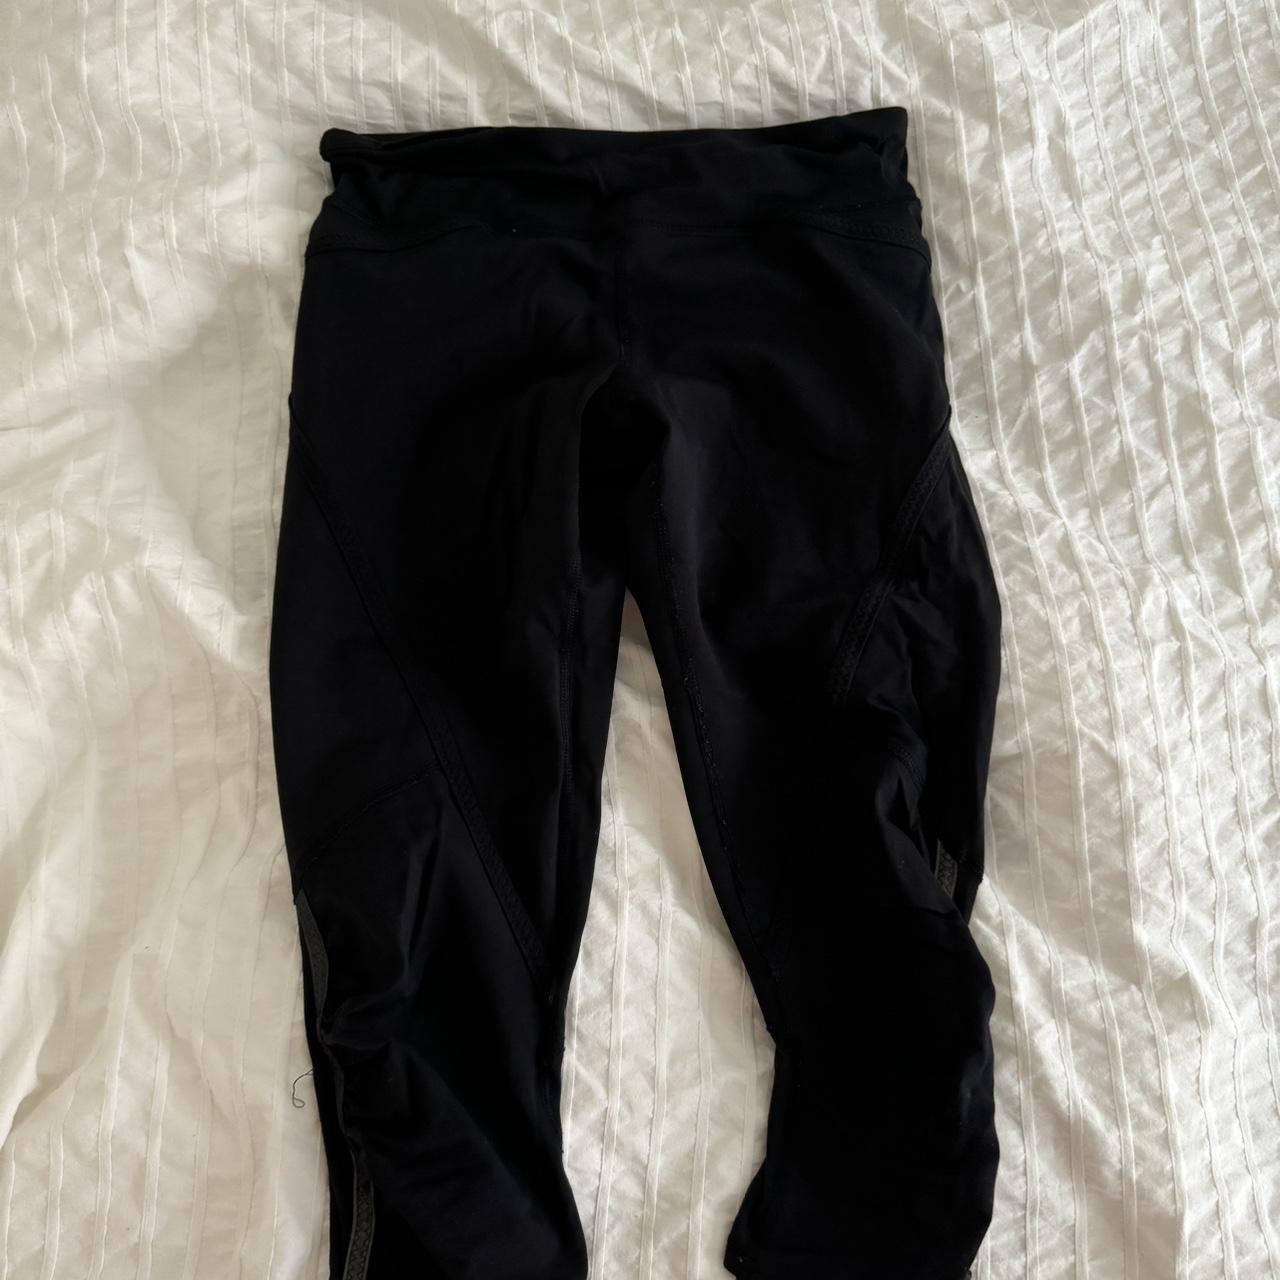 Lululemon flared leggings / yoga pants in black. - Depop